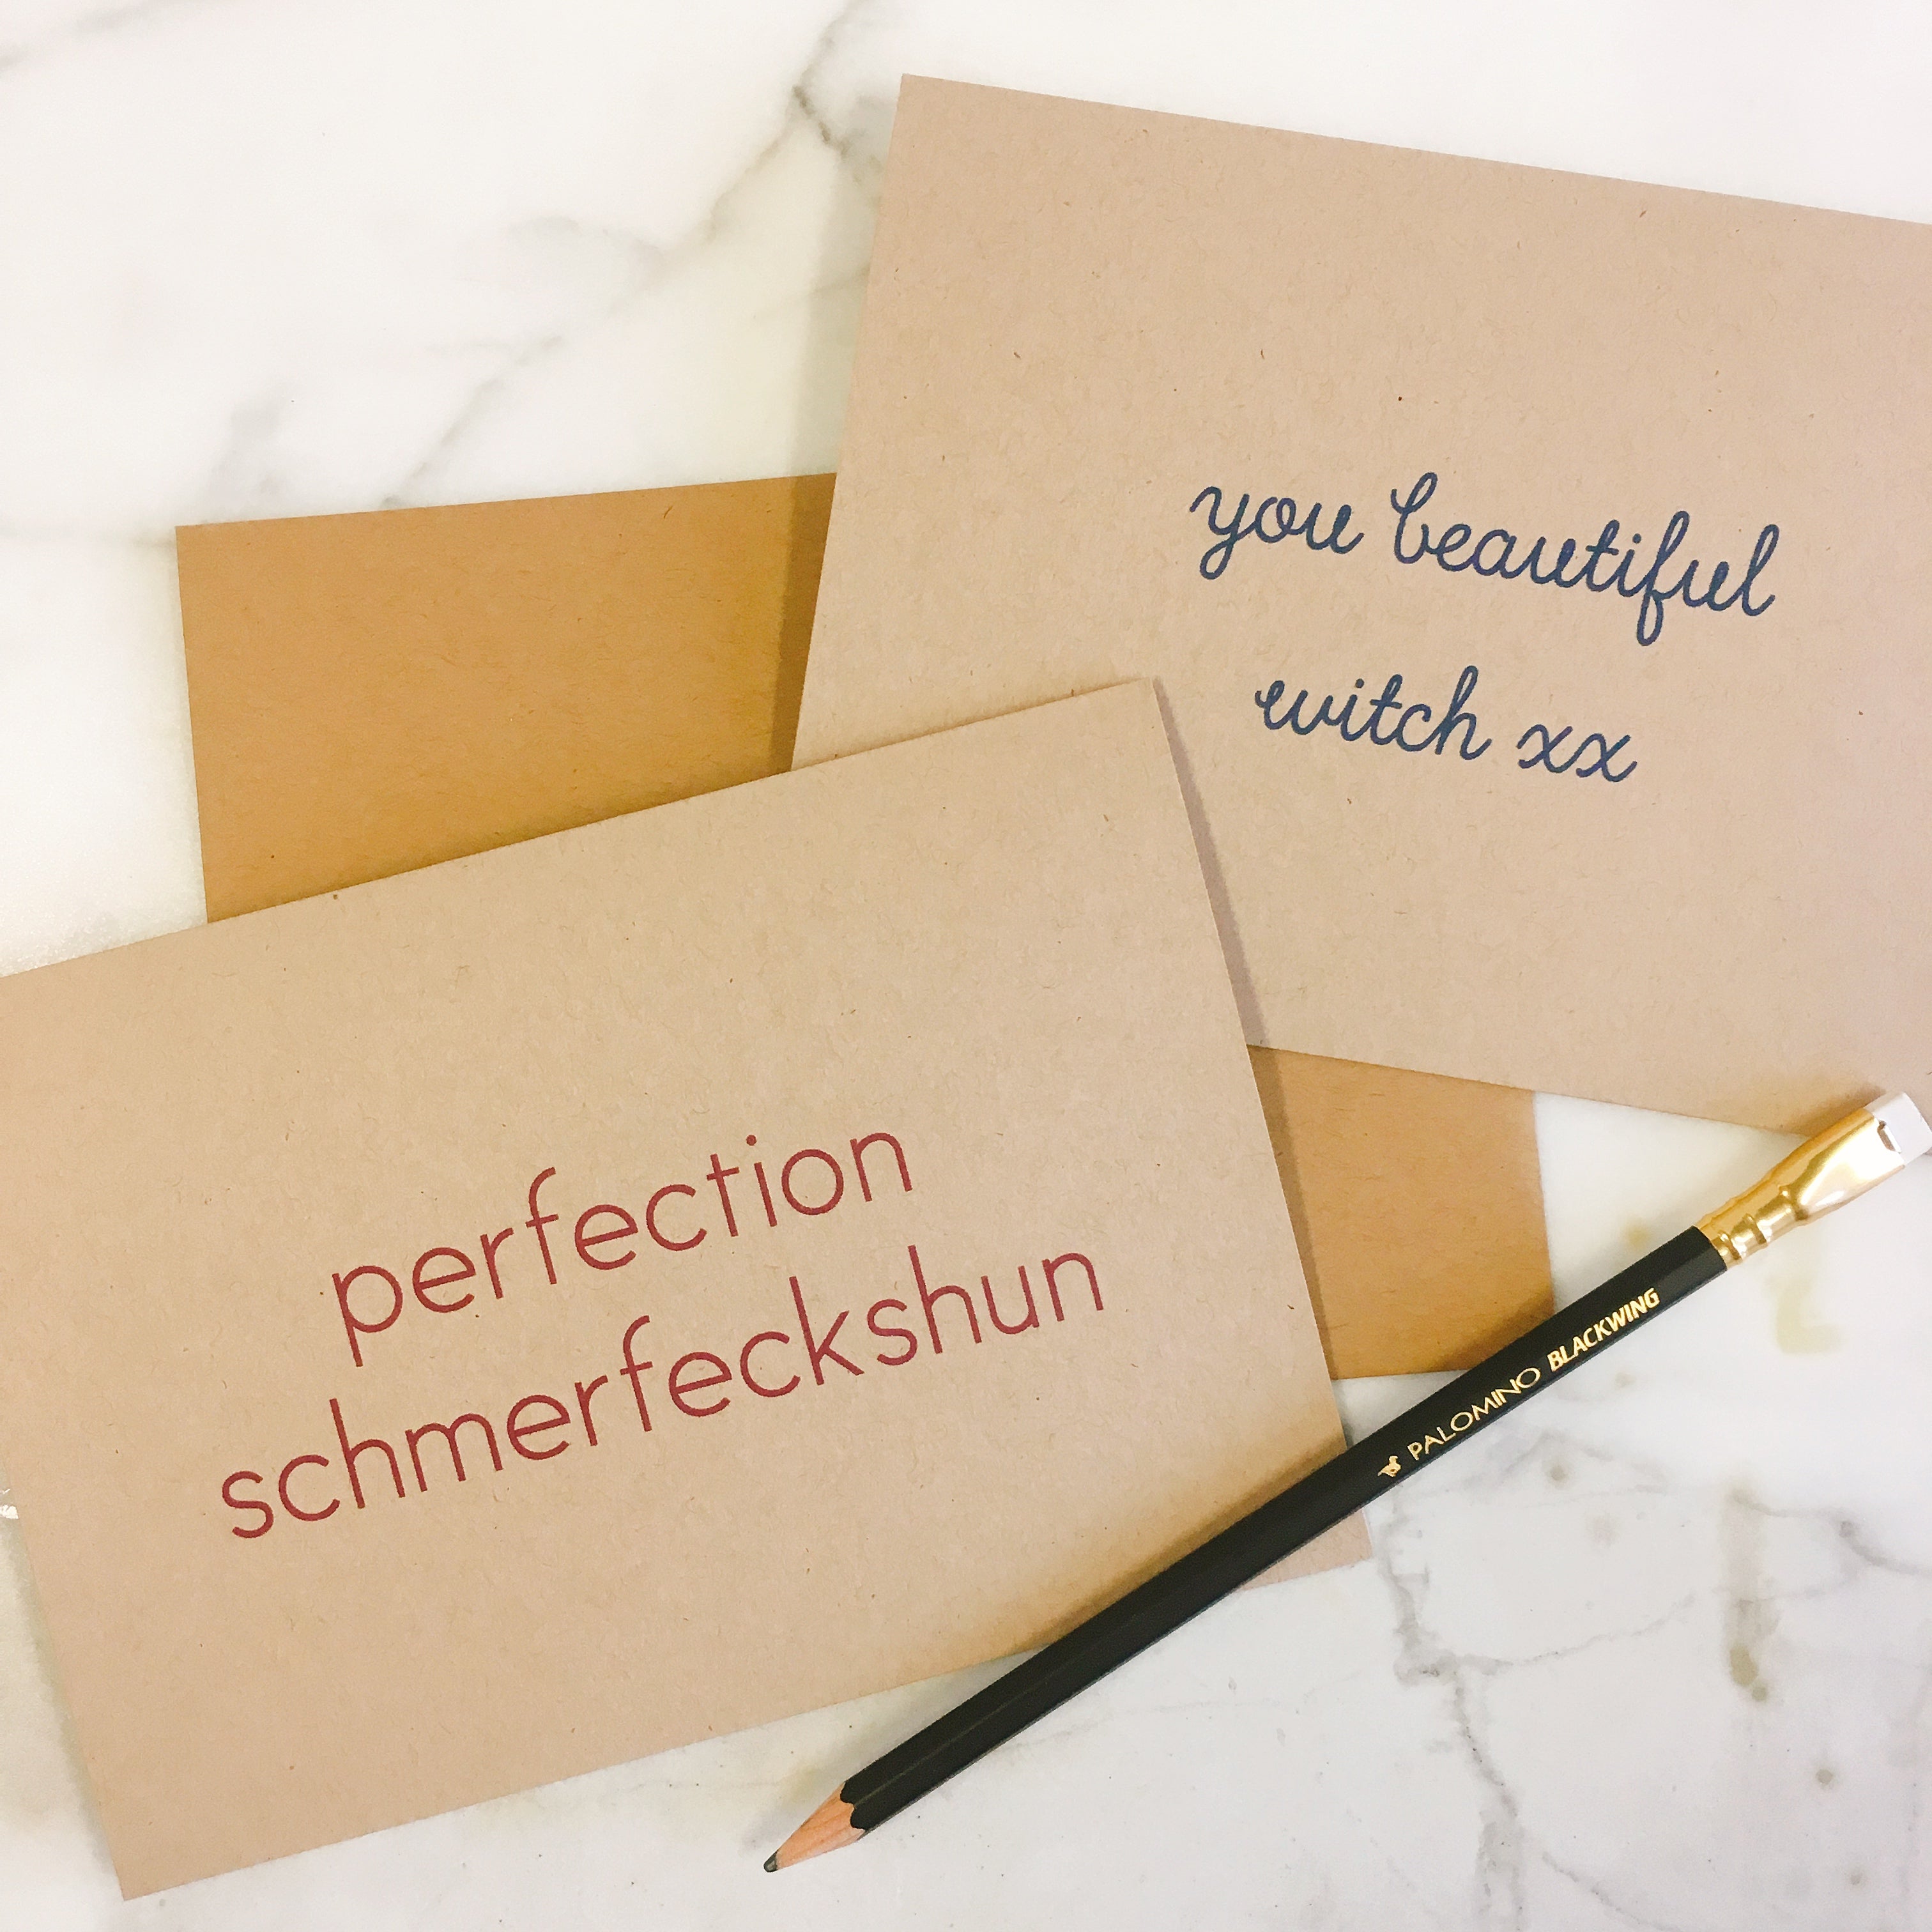 perfection schmerfeckshun - Greeting Card